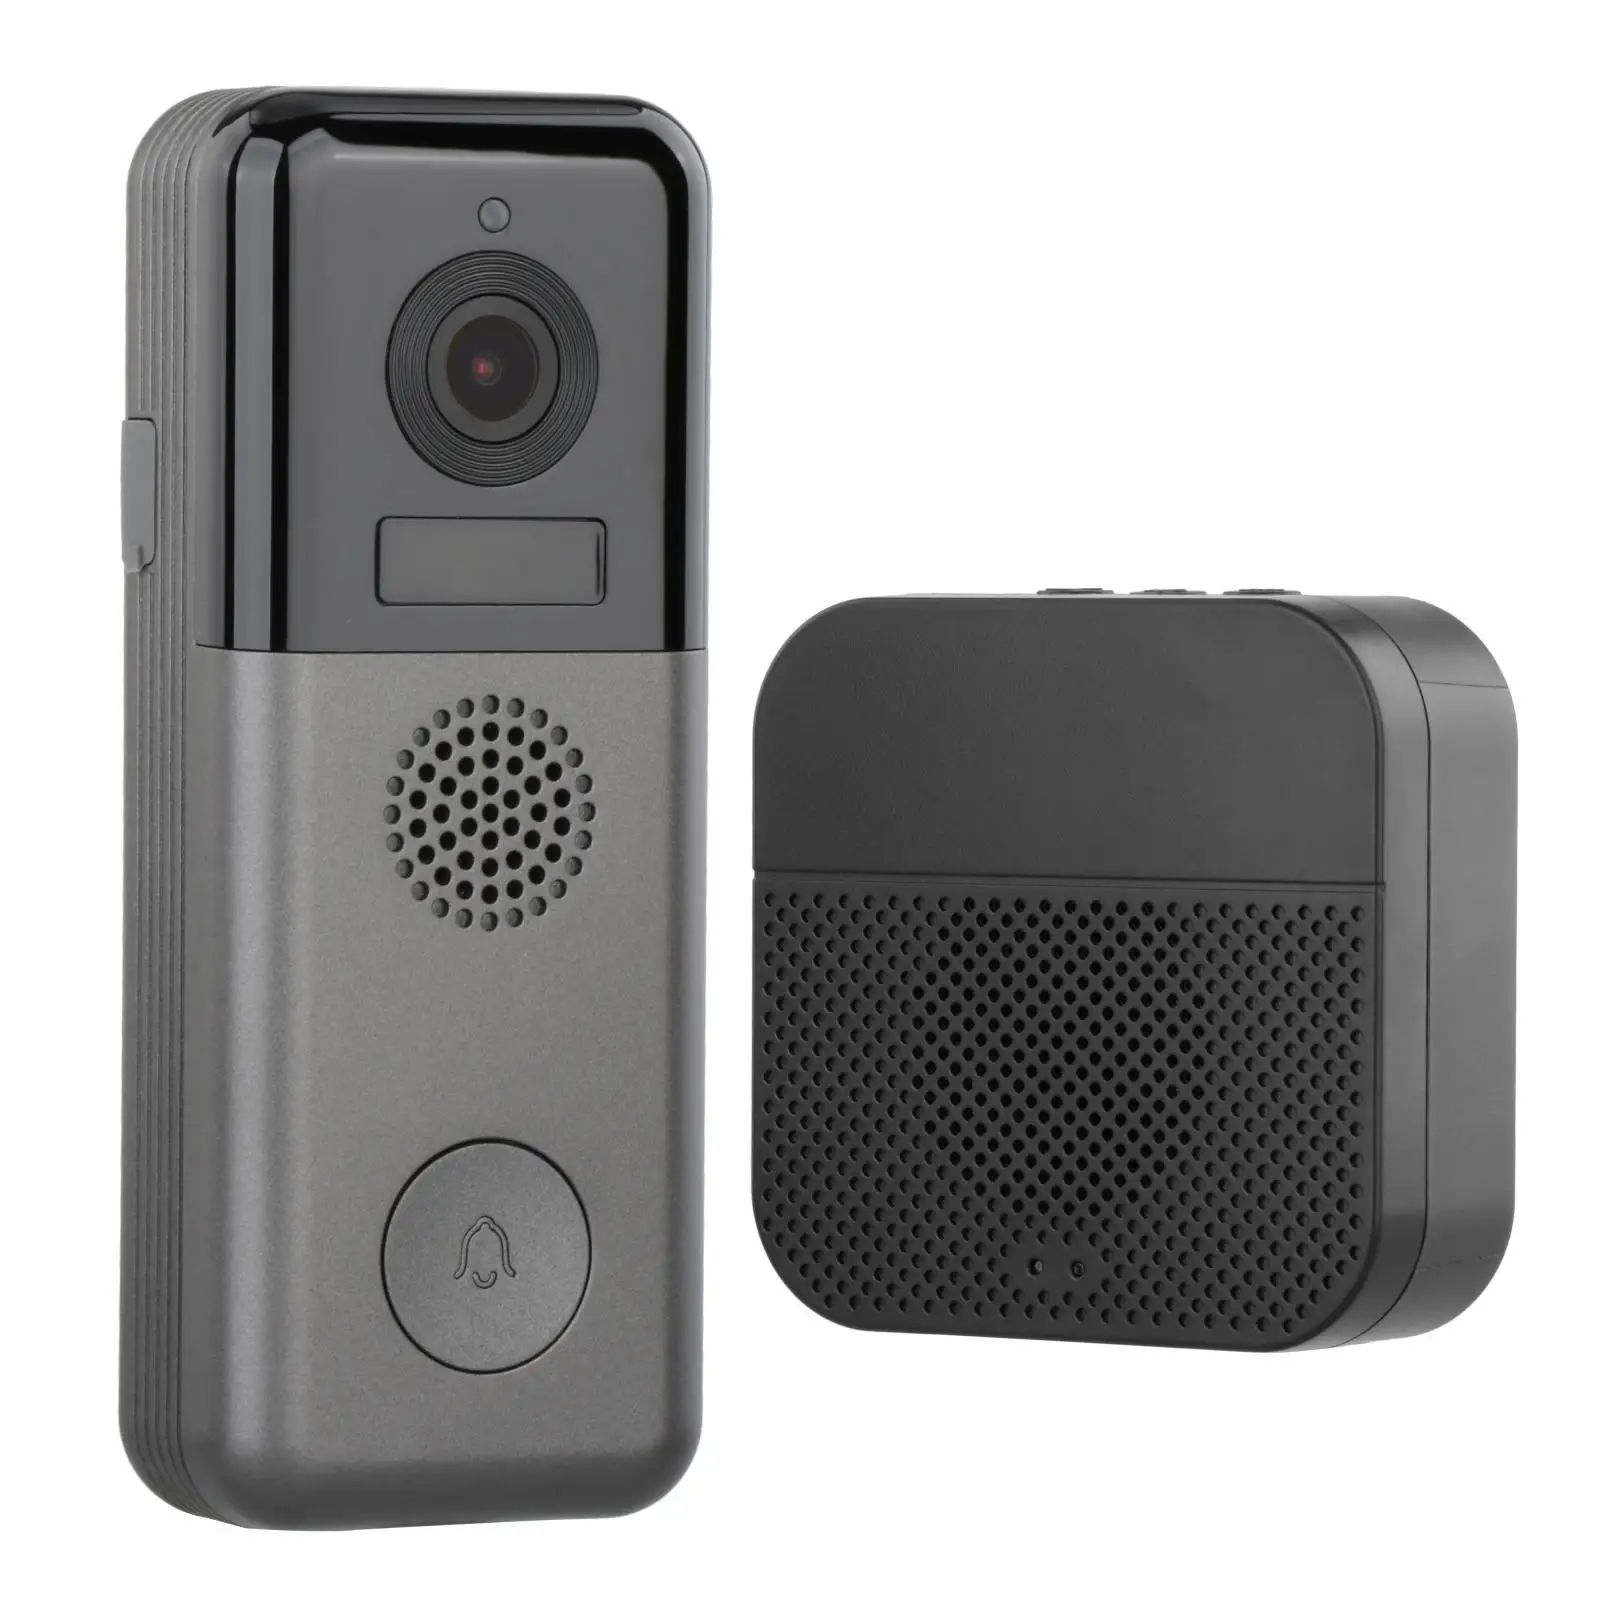 Video Doorbell Camera 2 Way Audio 2K Resolution Motion Detection IP65 Waterproof Remote Control UHD 2.4G WiFi Door Bell Camera